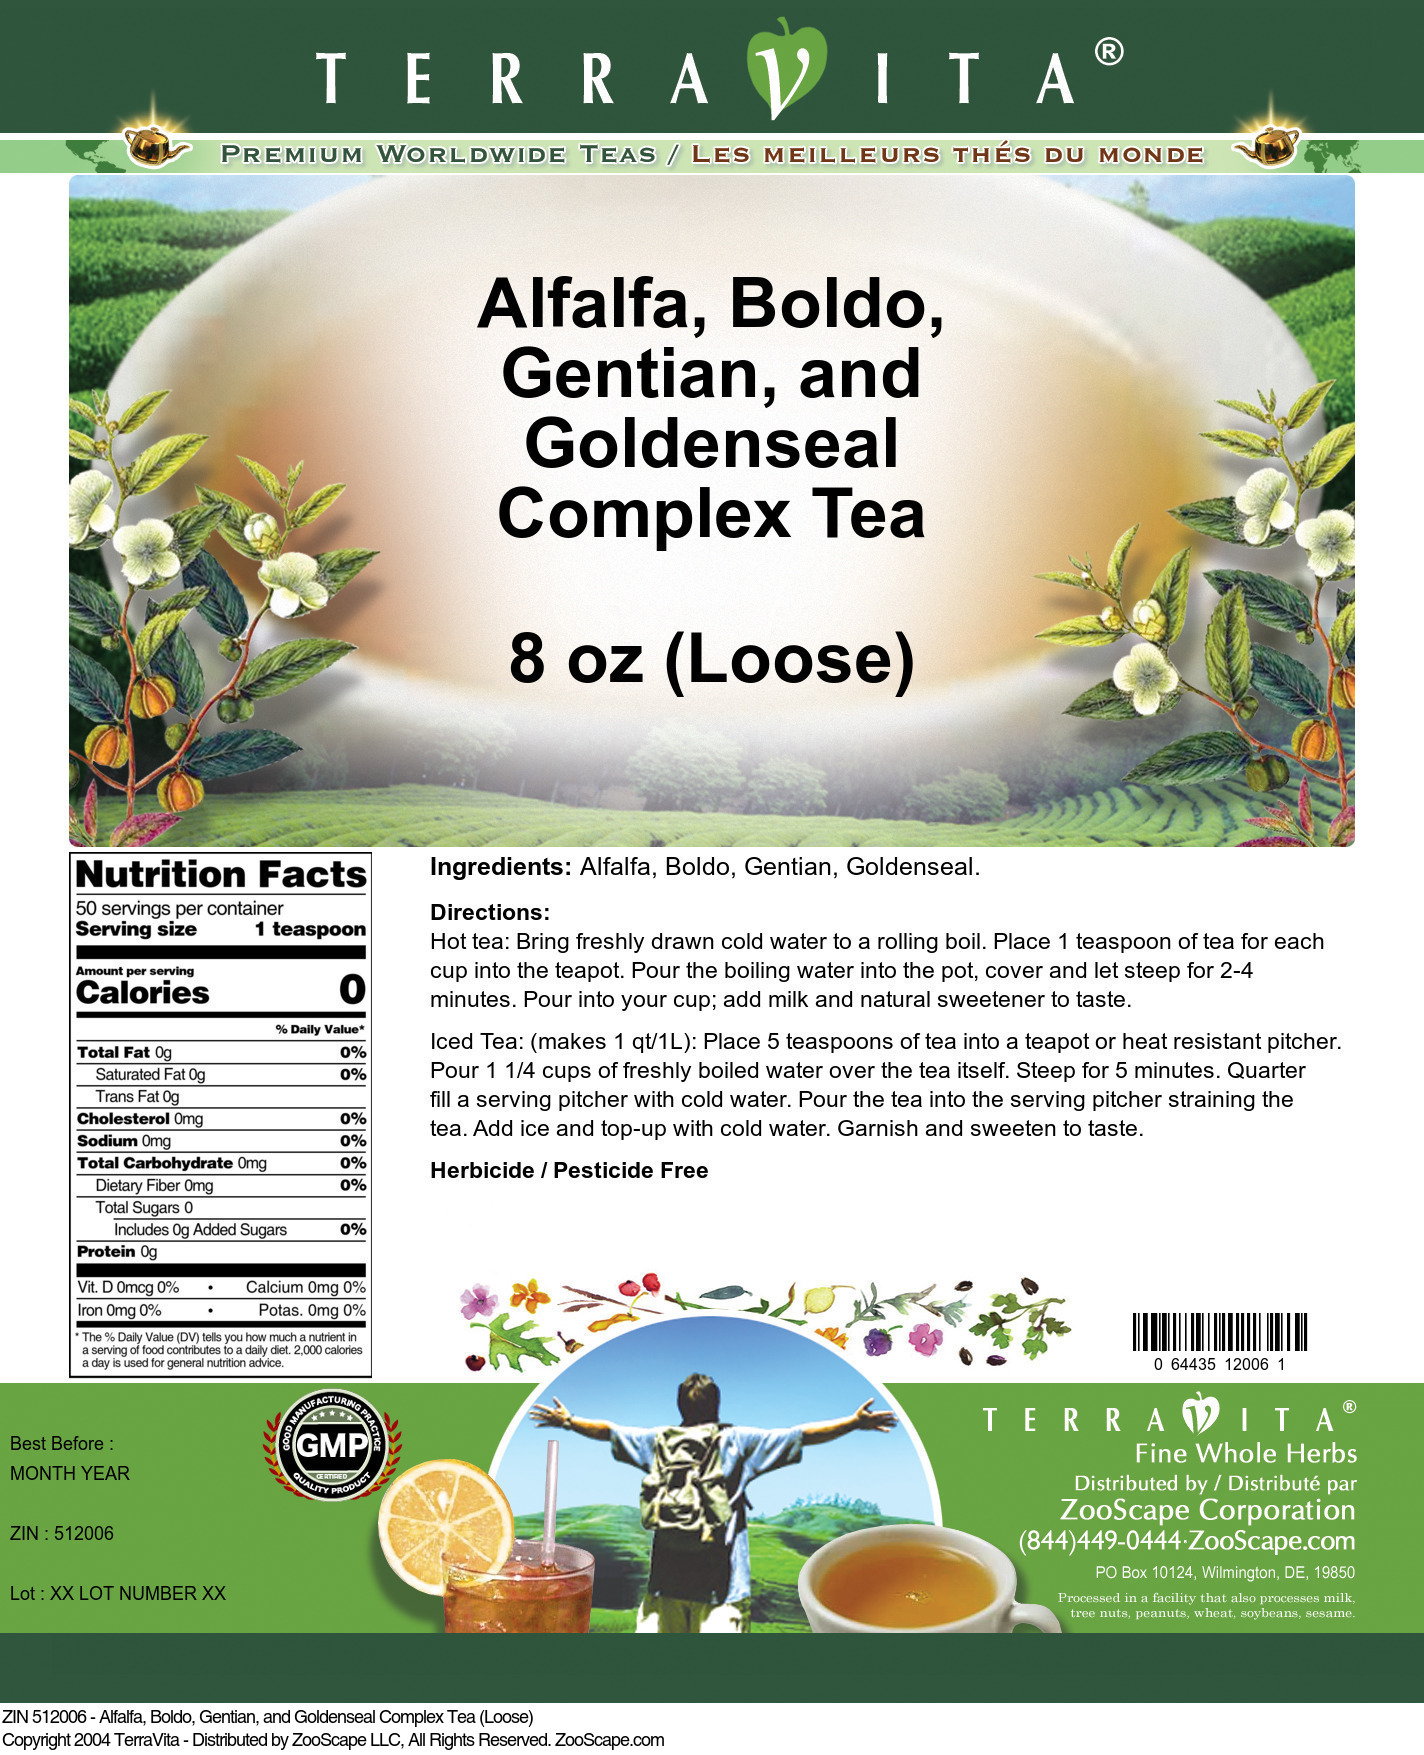 Alfalfa, Boldo, Gentian, and Goldenseal Complex Tea (Loose) - Label